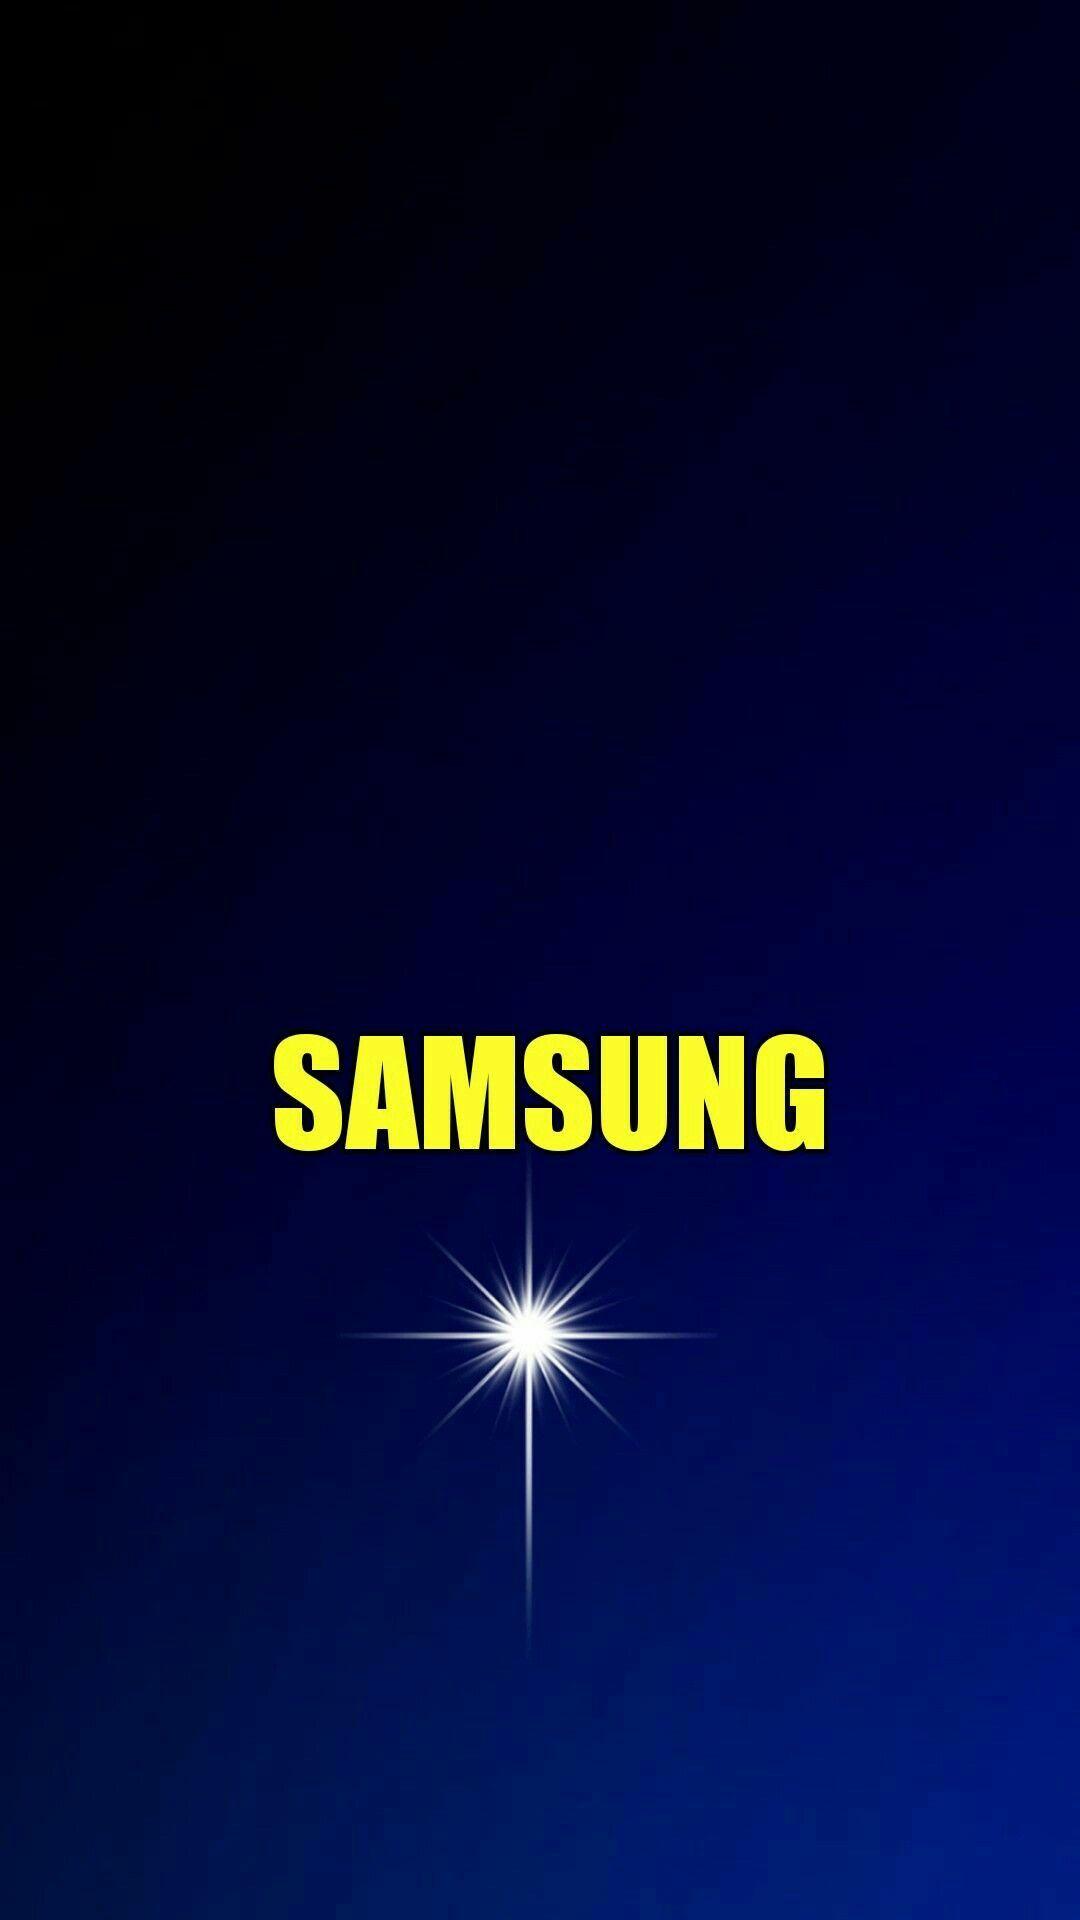 Samsung Brand Logo HD Phone Wallpapers - Wallpaper Cave